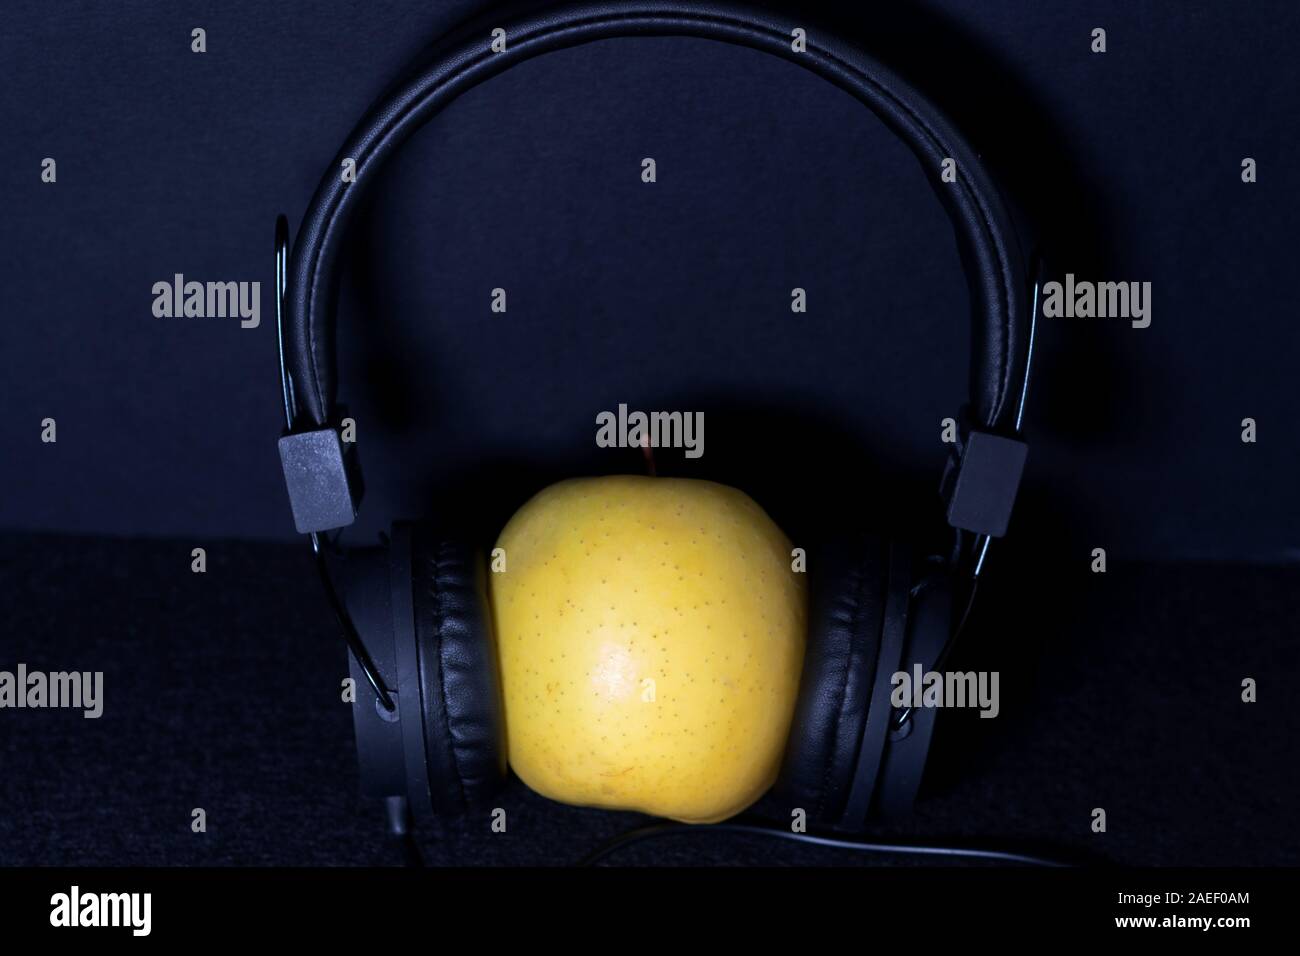 yellow apple wearing black headphones on a dark background. listening music concept. Stock Photo